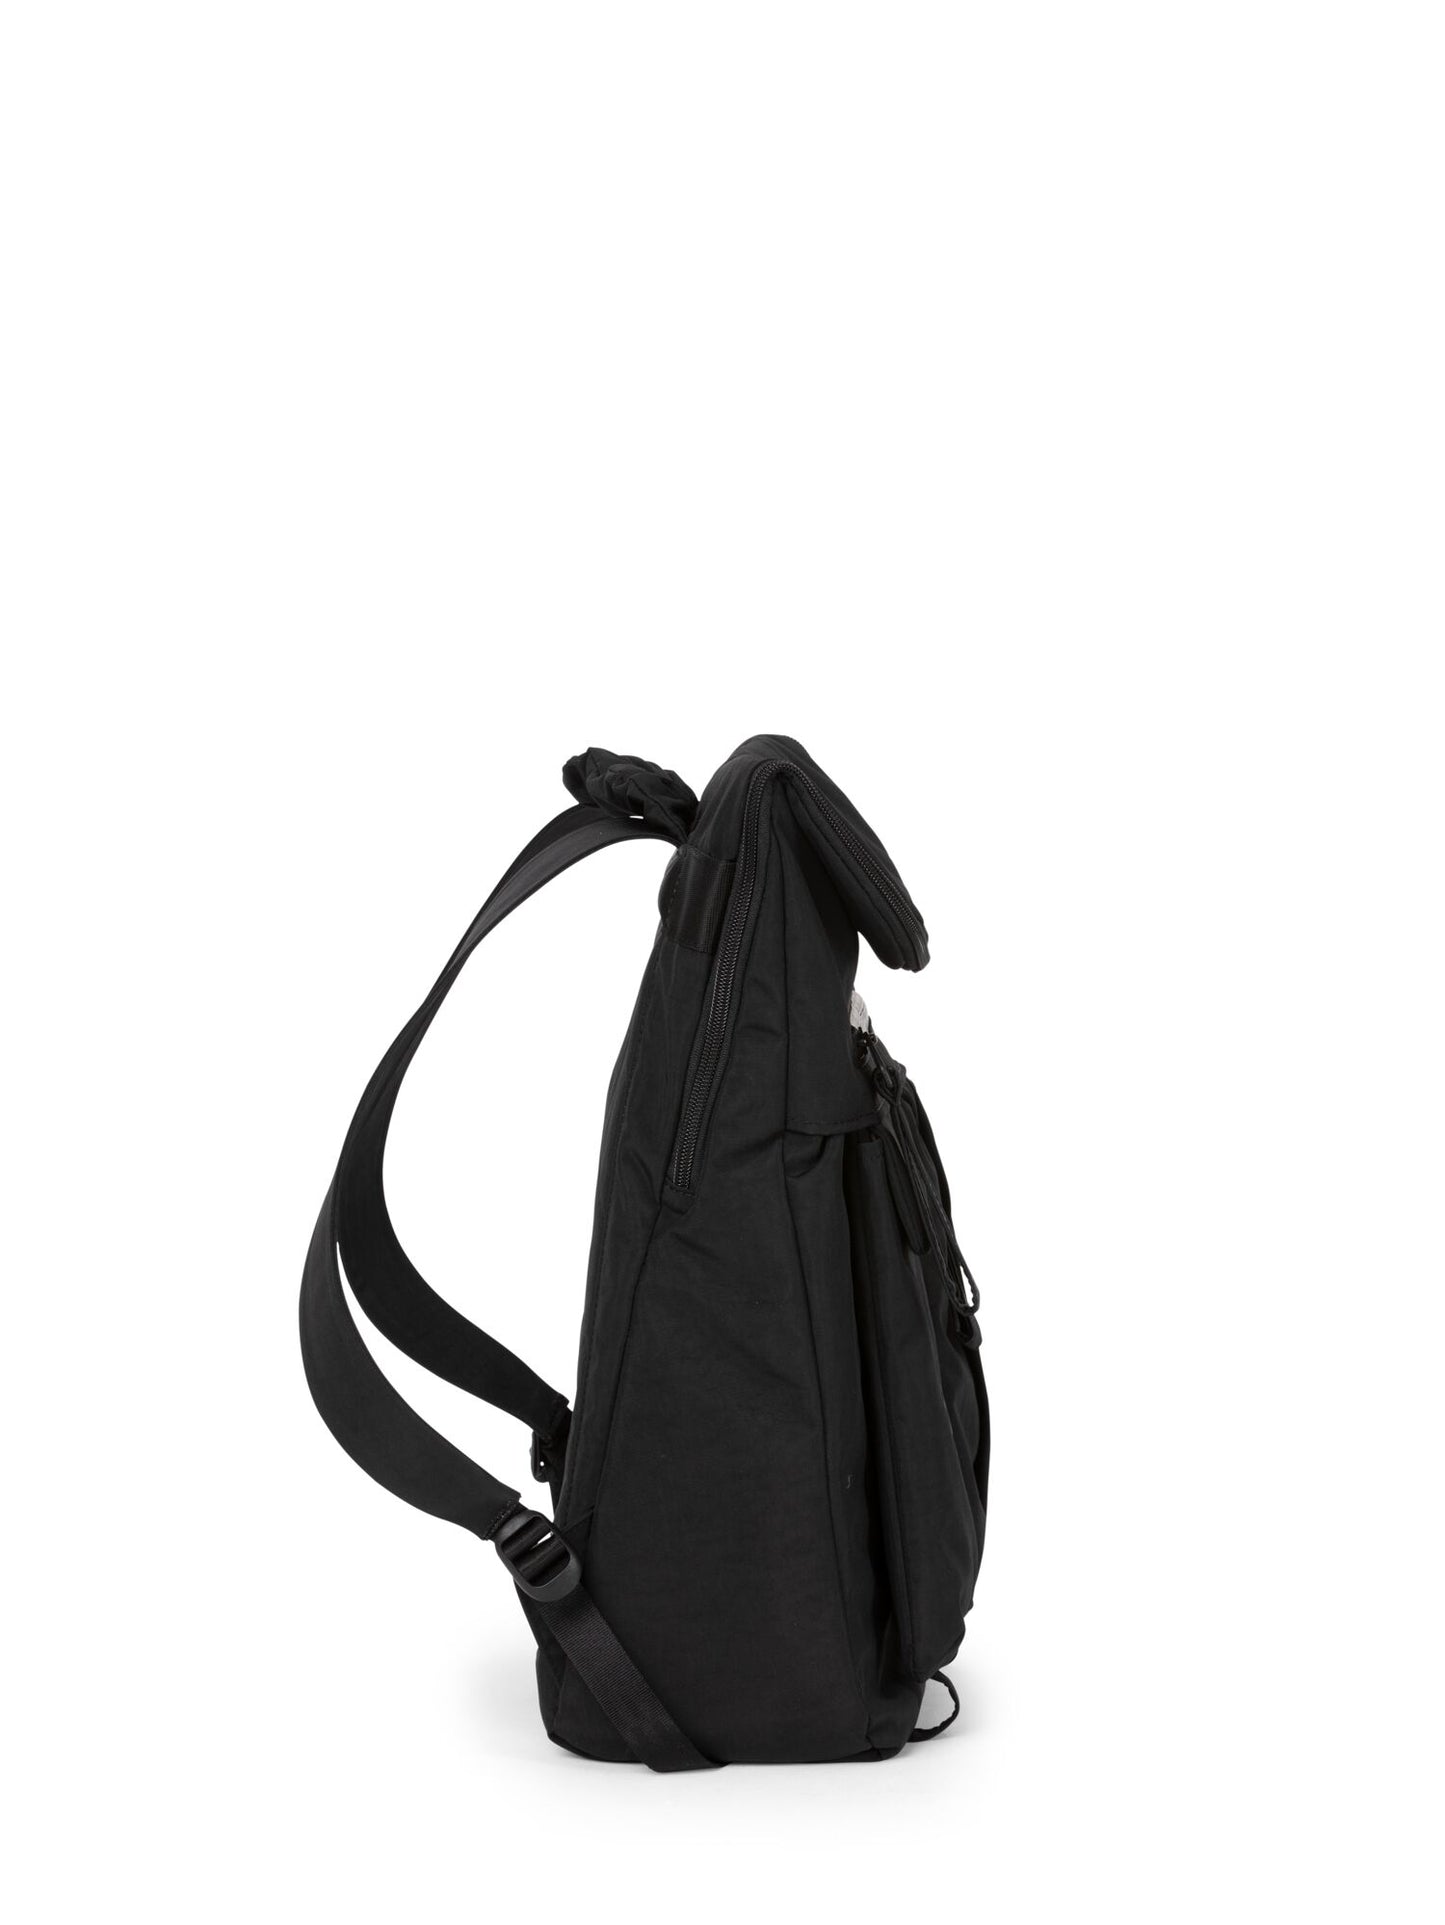 pinqponq-backpack-Klak-Crinkle-Black-side